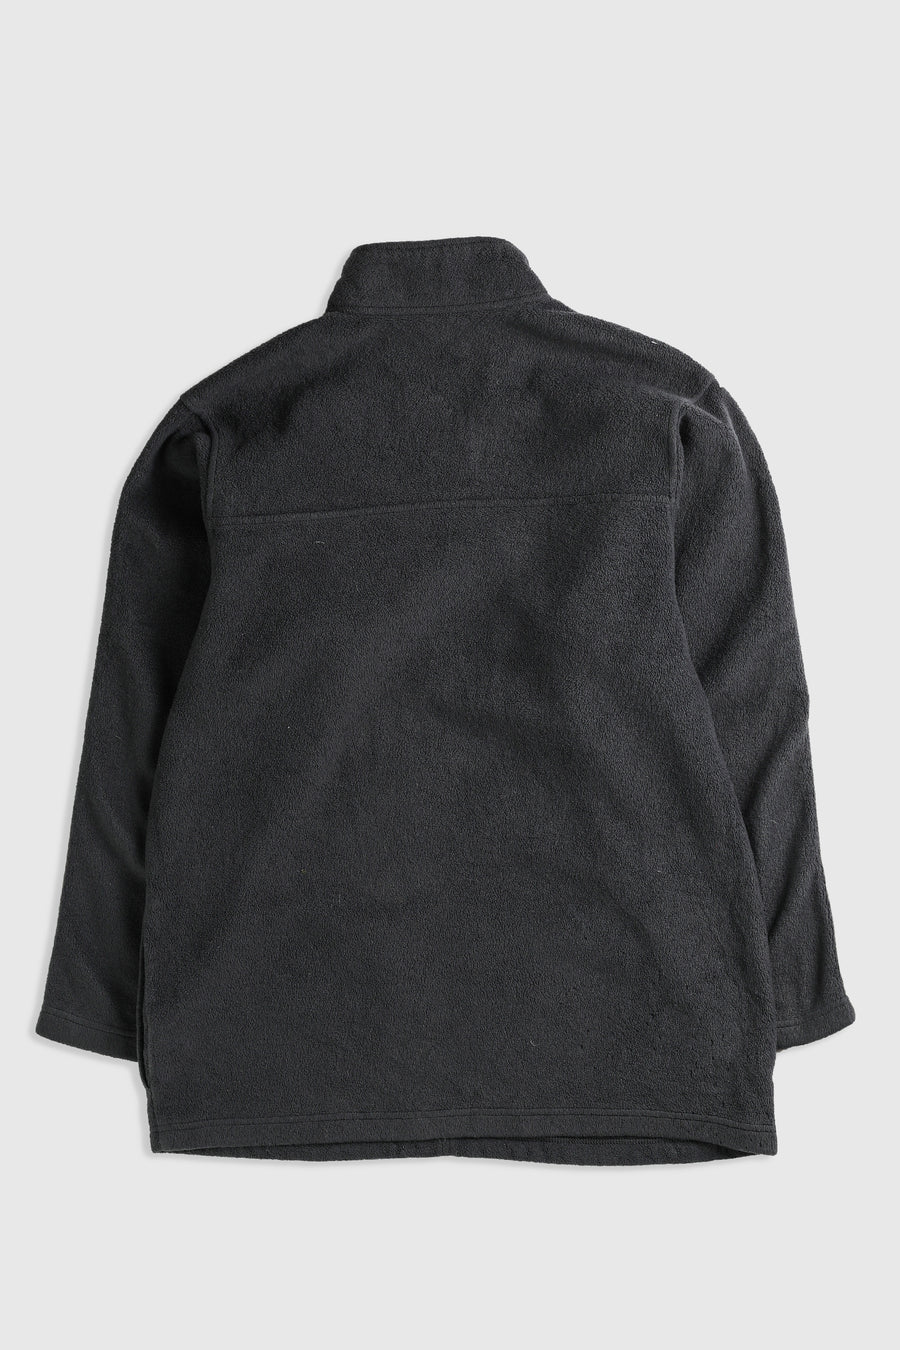 Vintage Adidas Fleece Sweatshirt